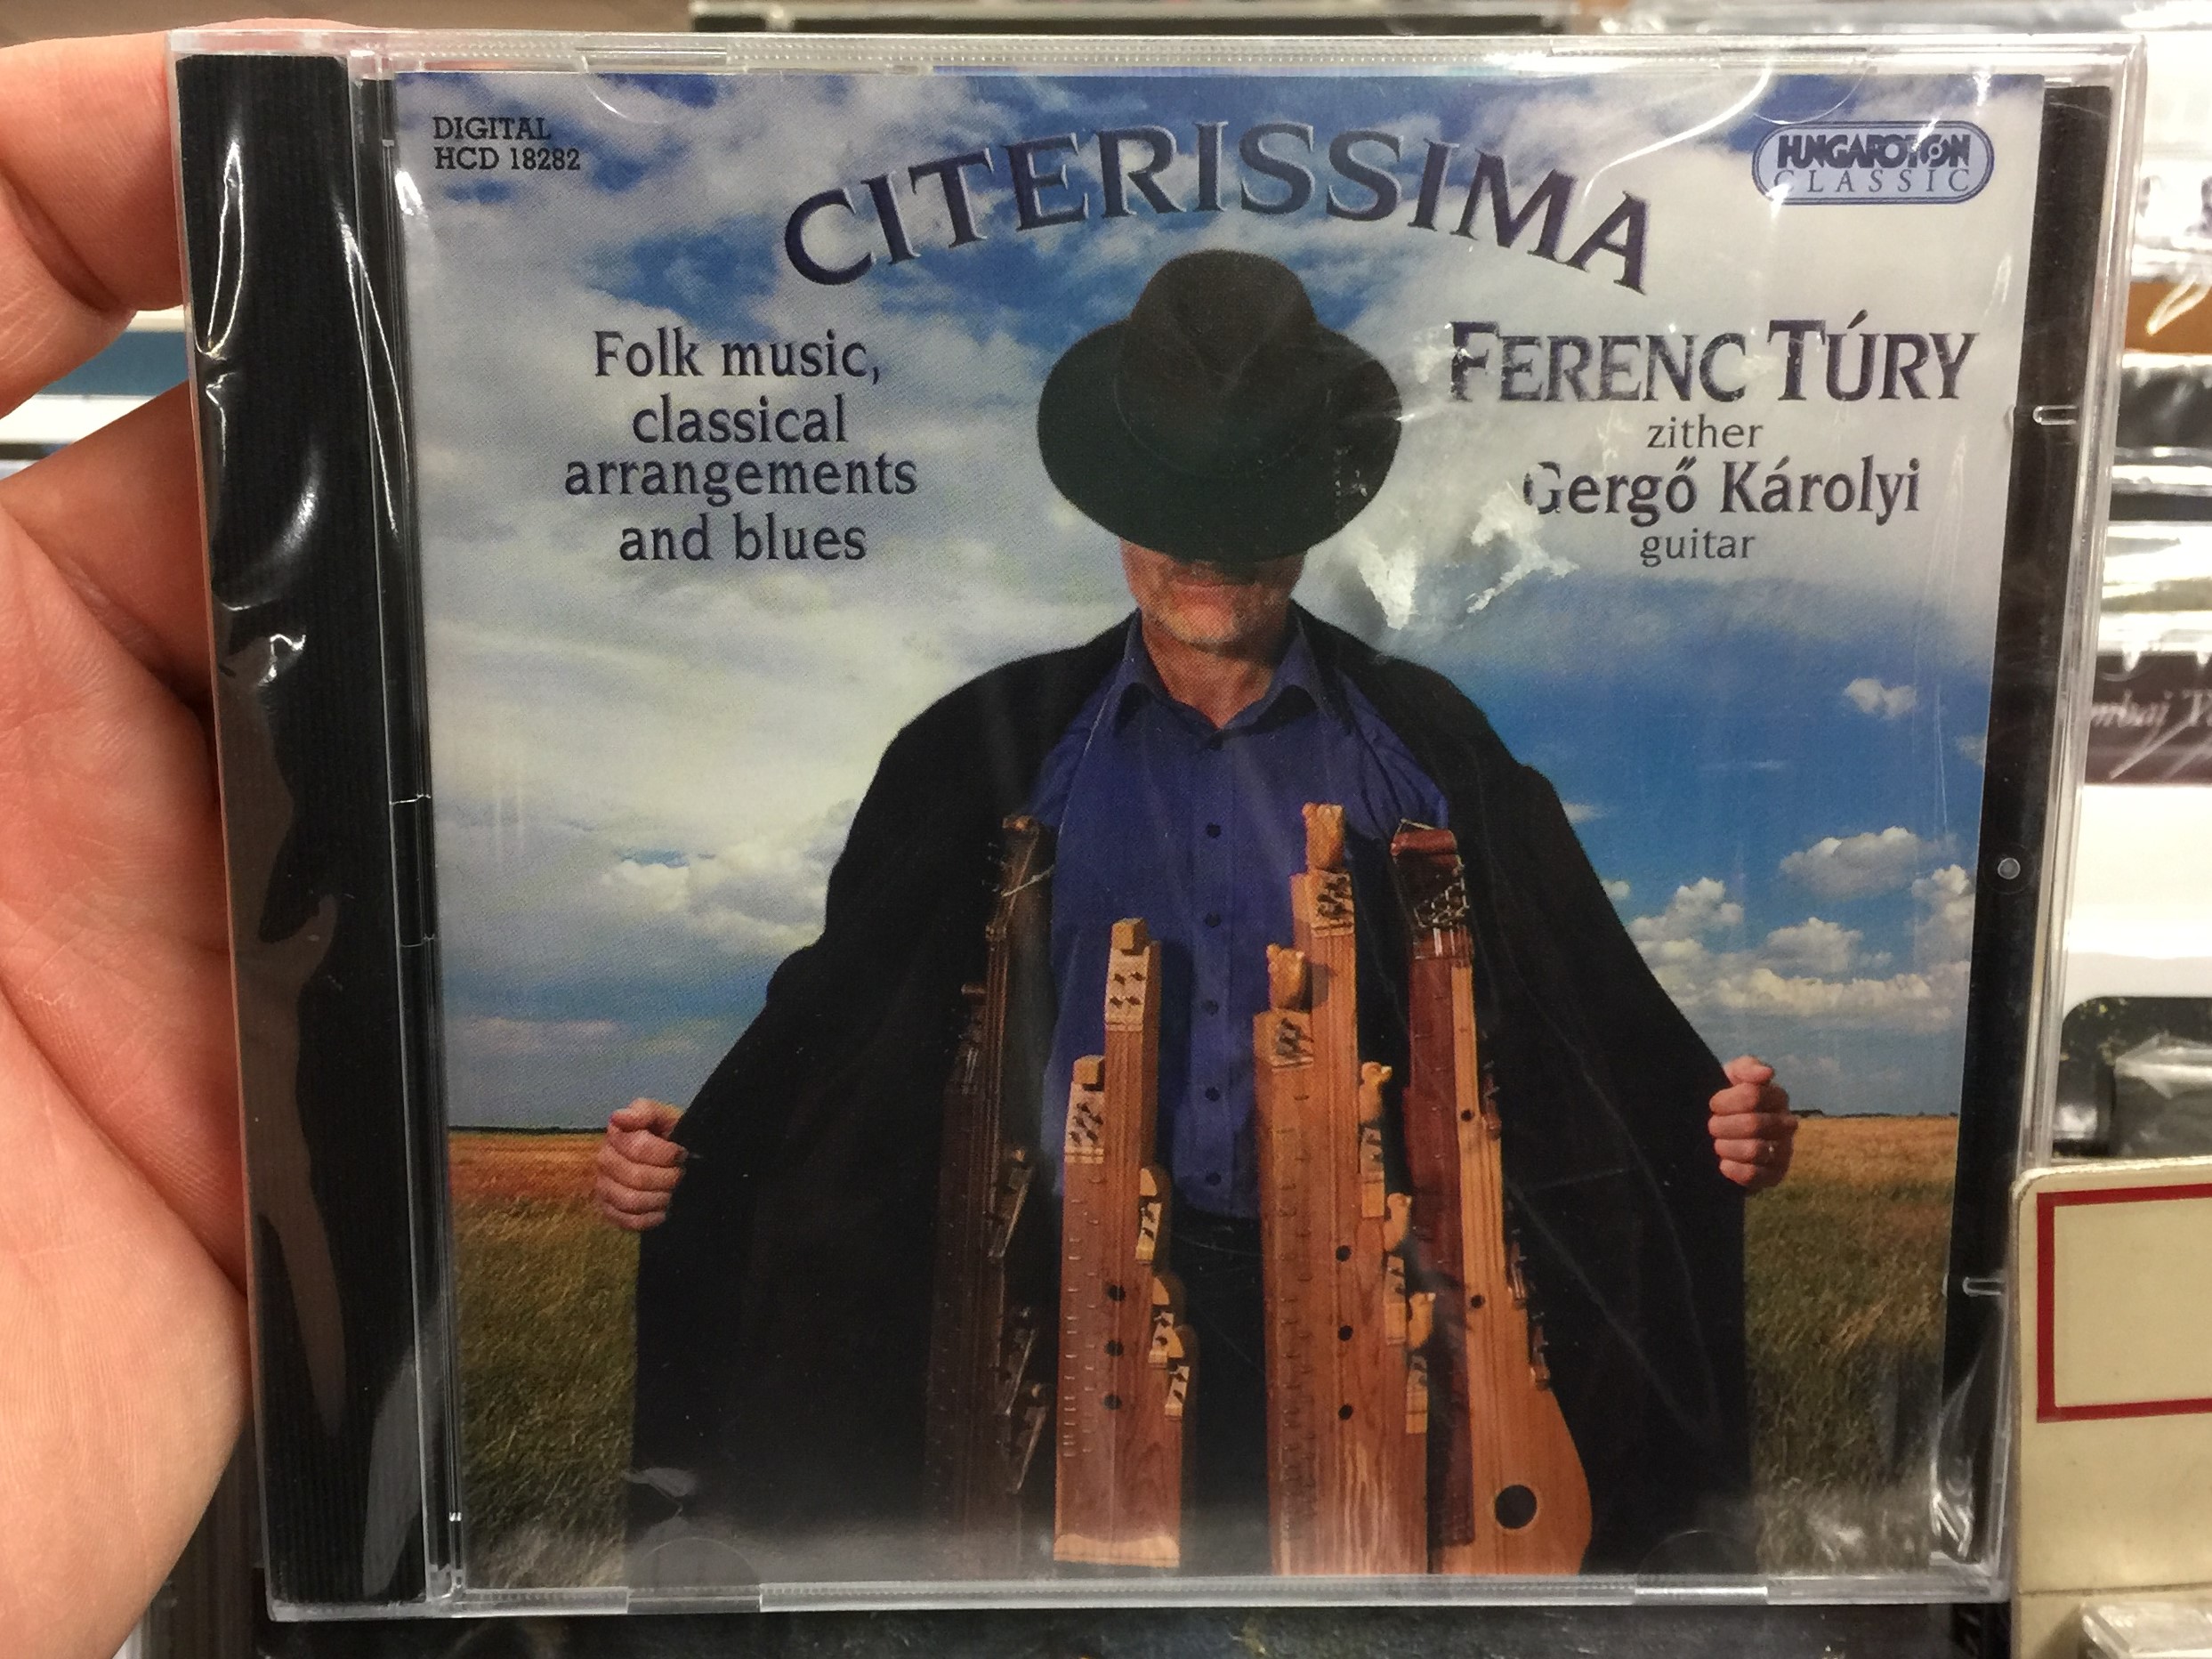 citerissima-ferenc-tury-zither-gergo-karolyi-guitar-folk-music-classical-arrangements-and-blues-hungaroton-classic-audio-cd-2009-stereo-hcd-18282-1-.jpg